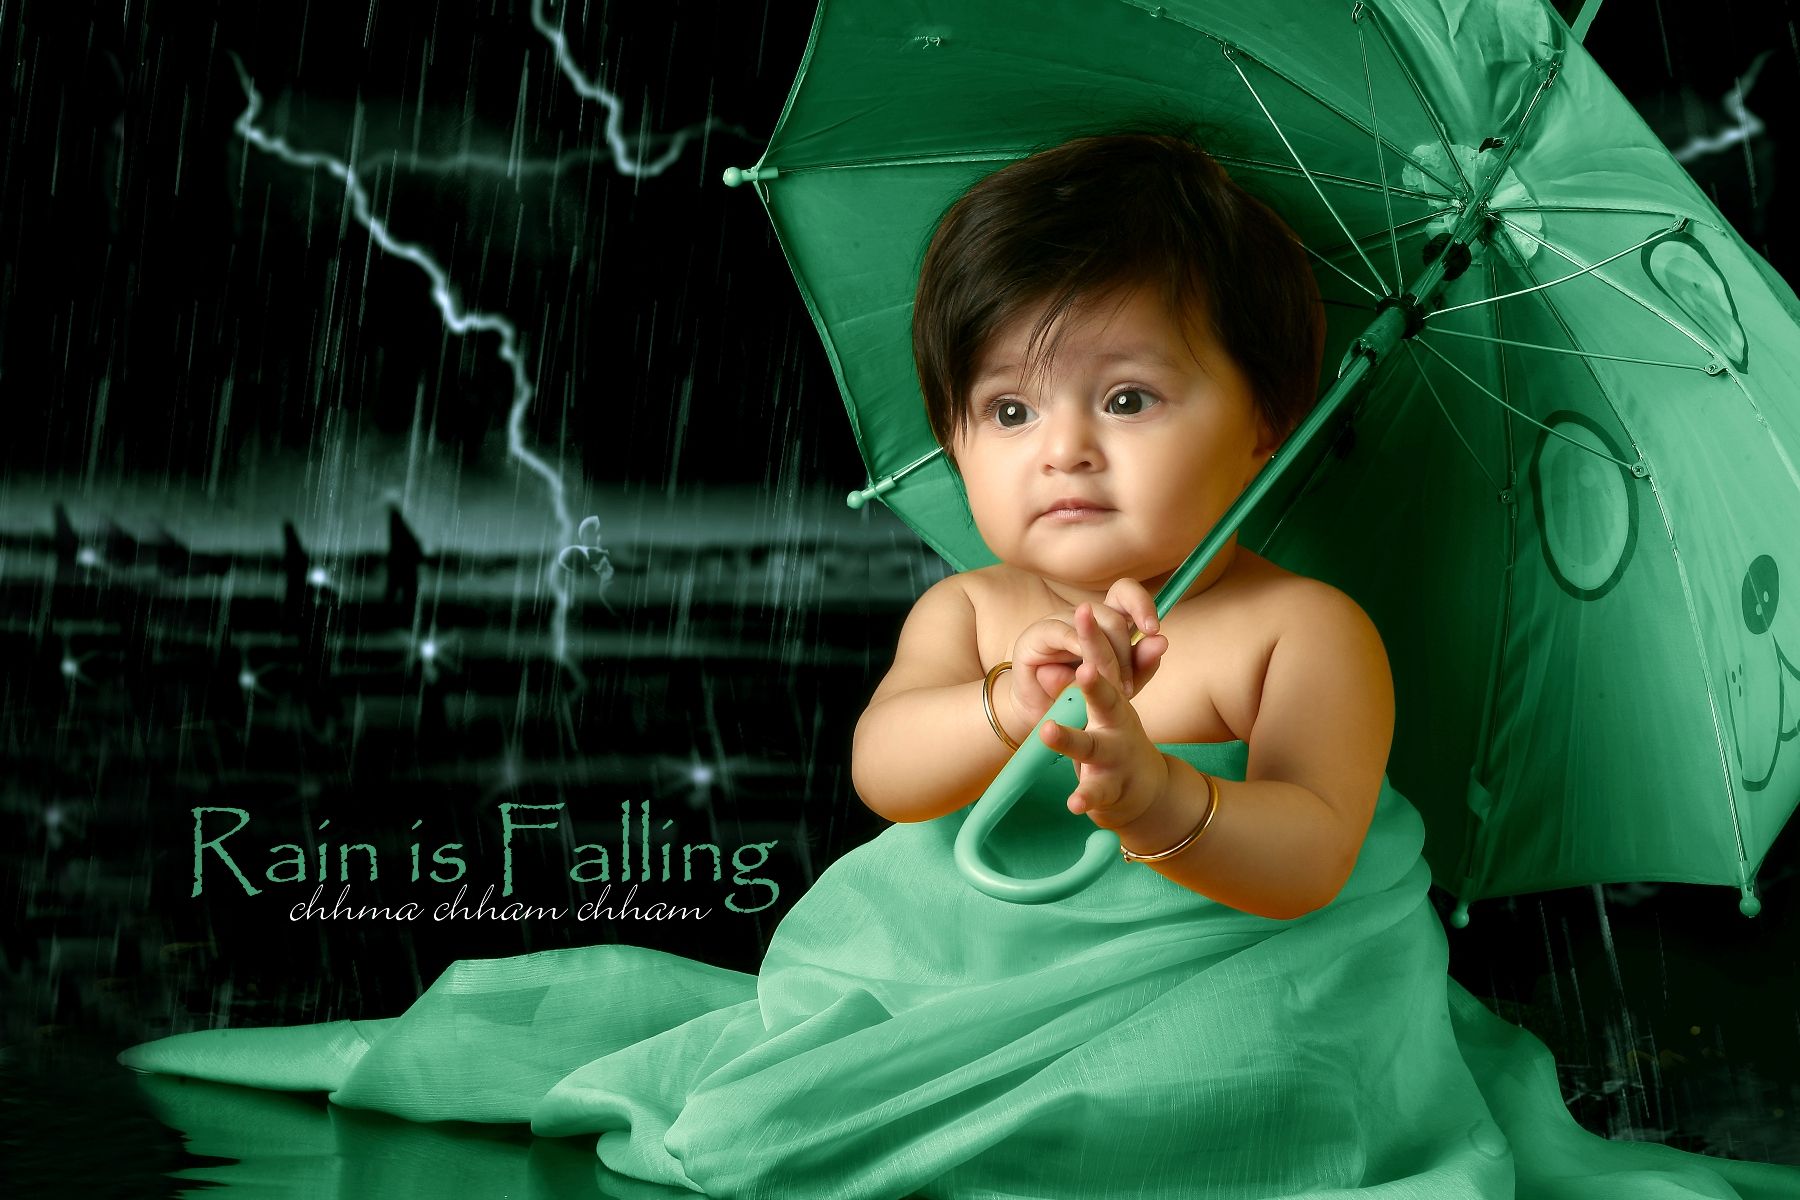 Sweet Baby Hd Wallpaper - Cute Baby Images Hd Download - 1800x1200 Wallpaper  